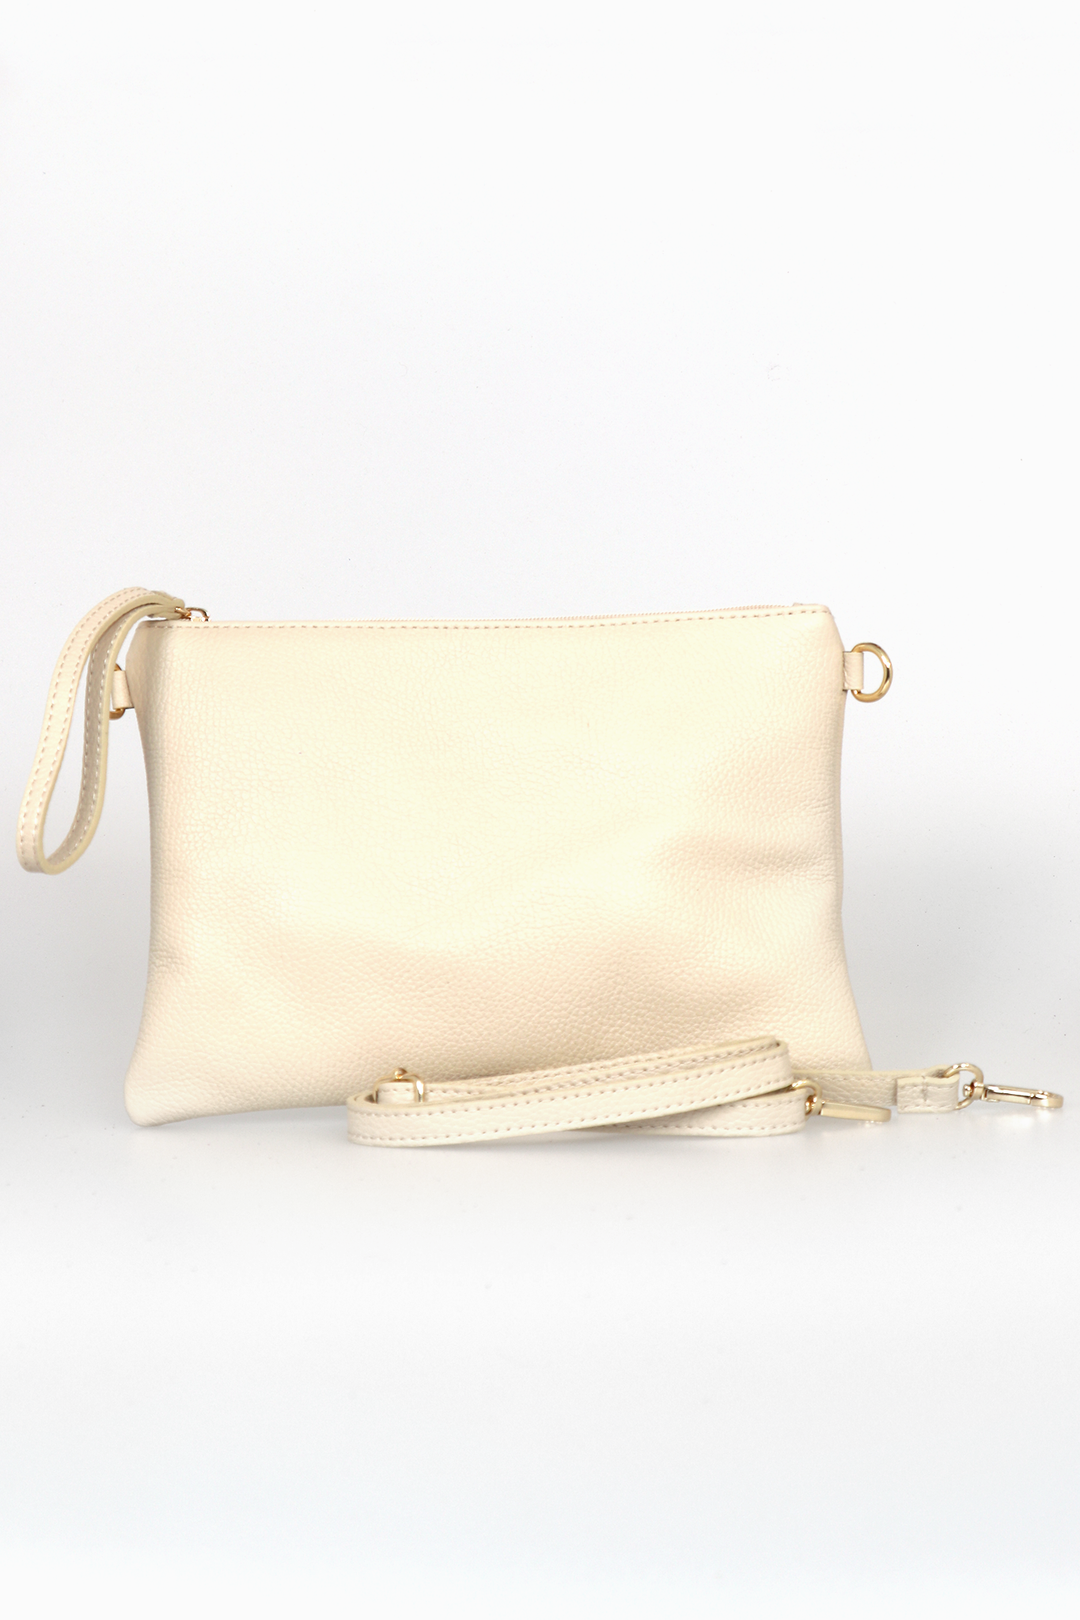 Cream Large Genuine Italian Leather Wristlet Clutch Bag